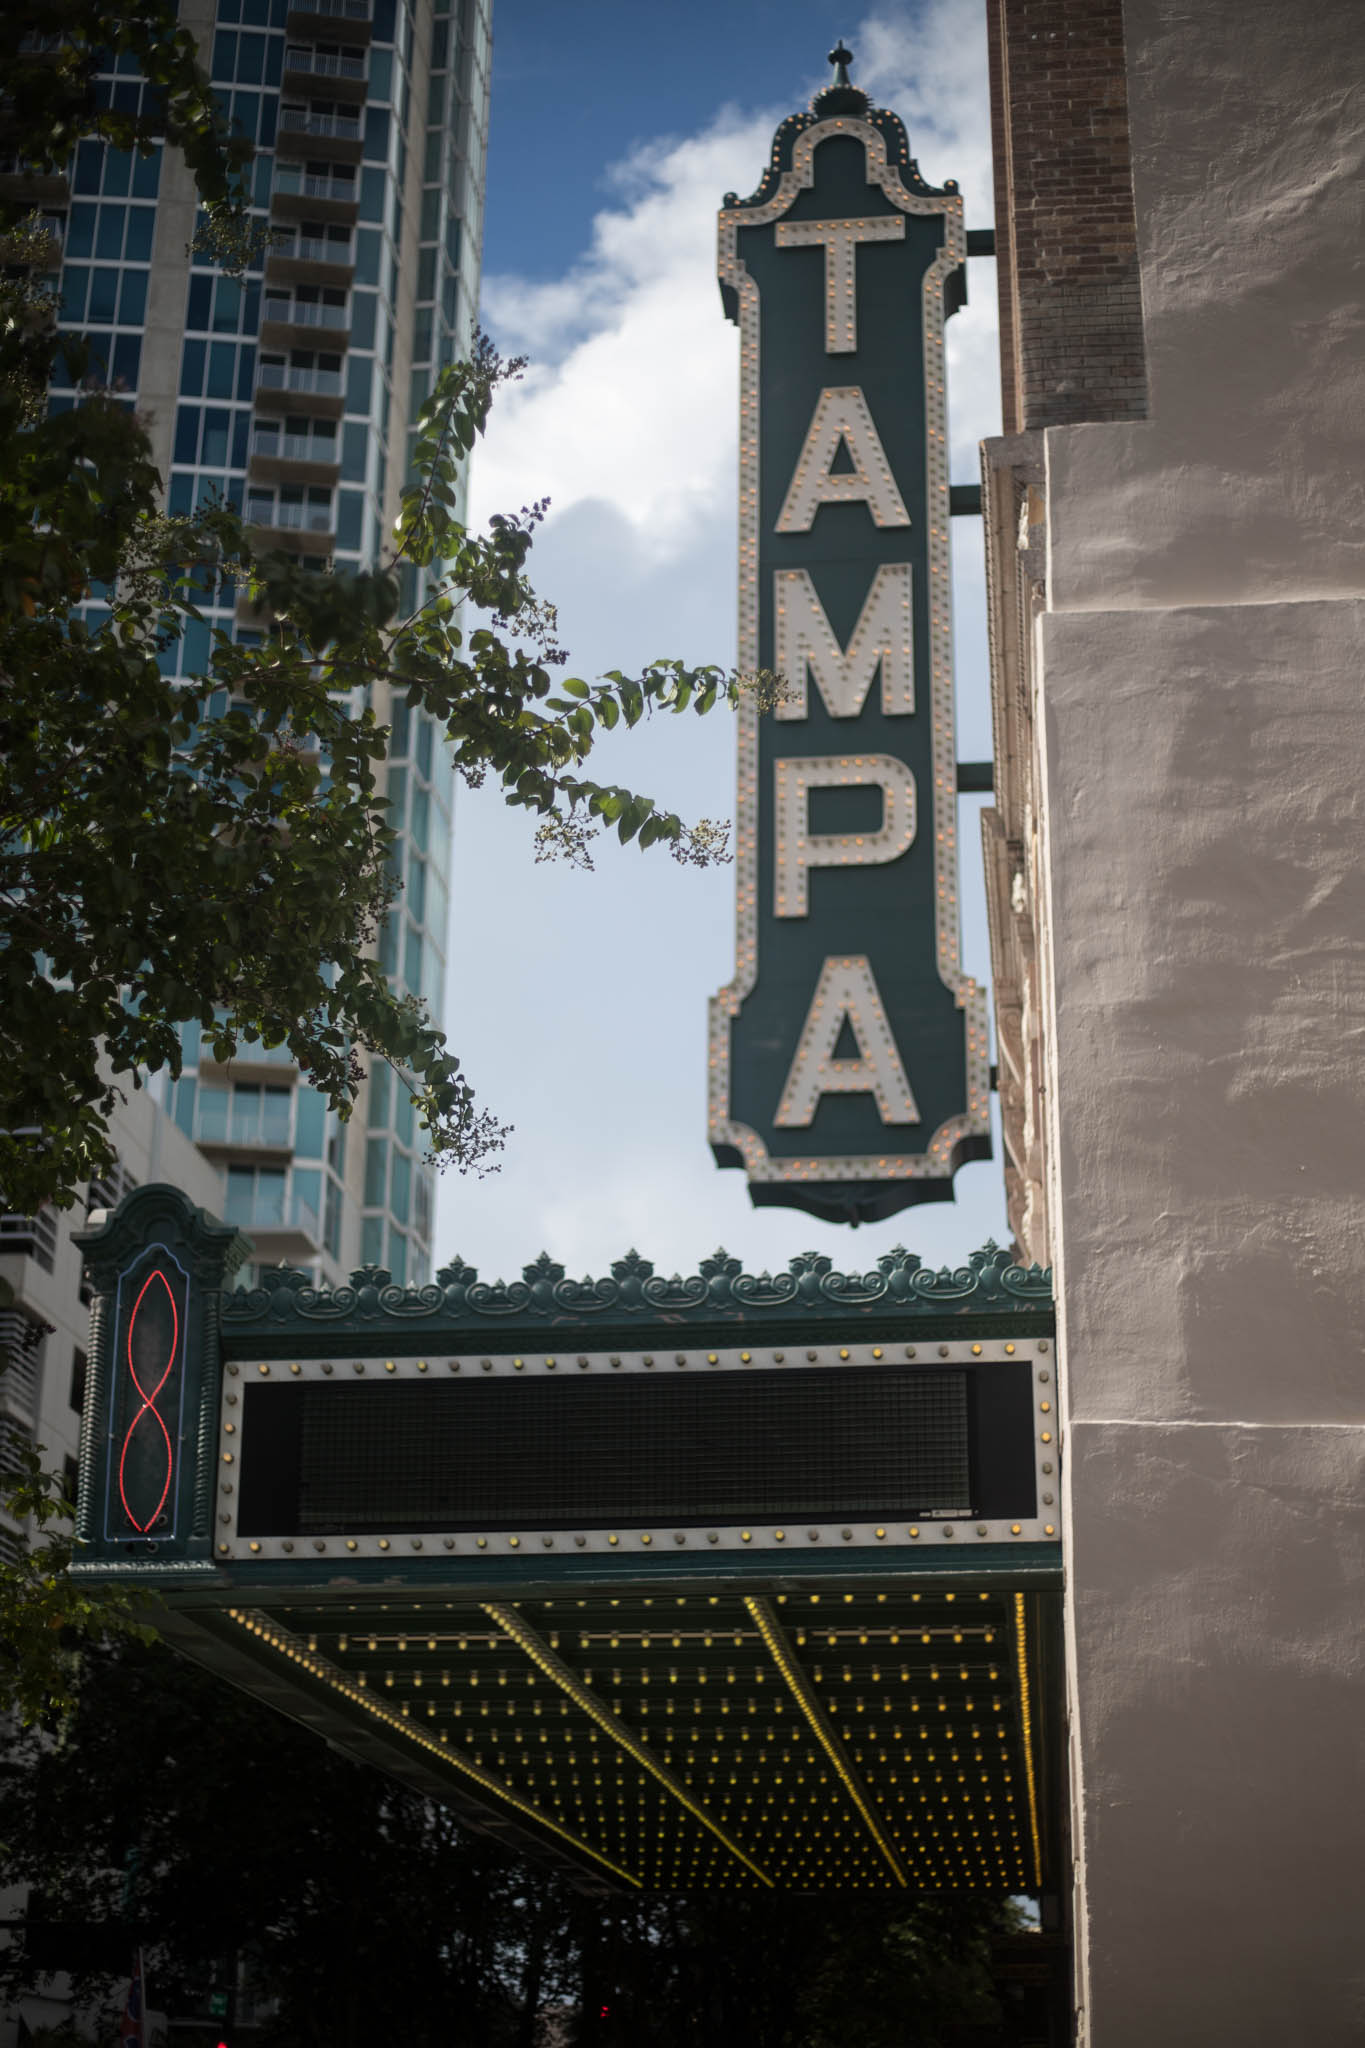 Tampa Theatre hosts its annual Halloween film screening